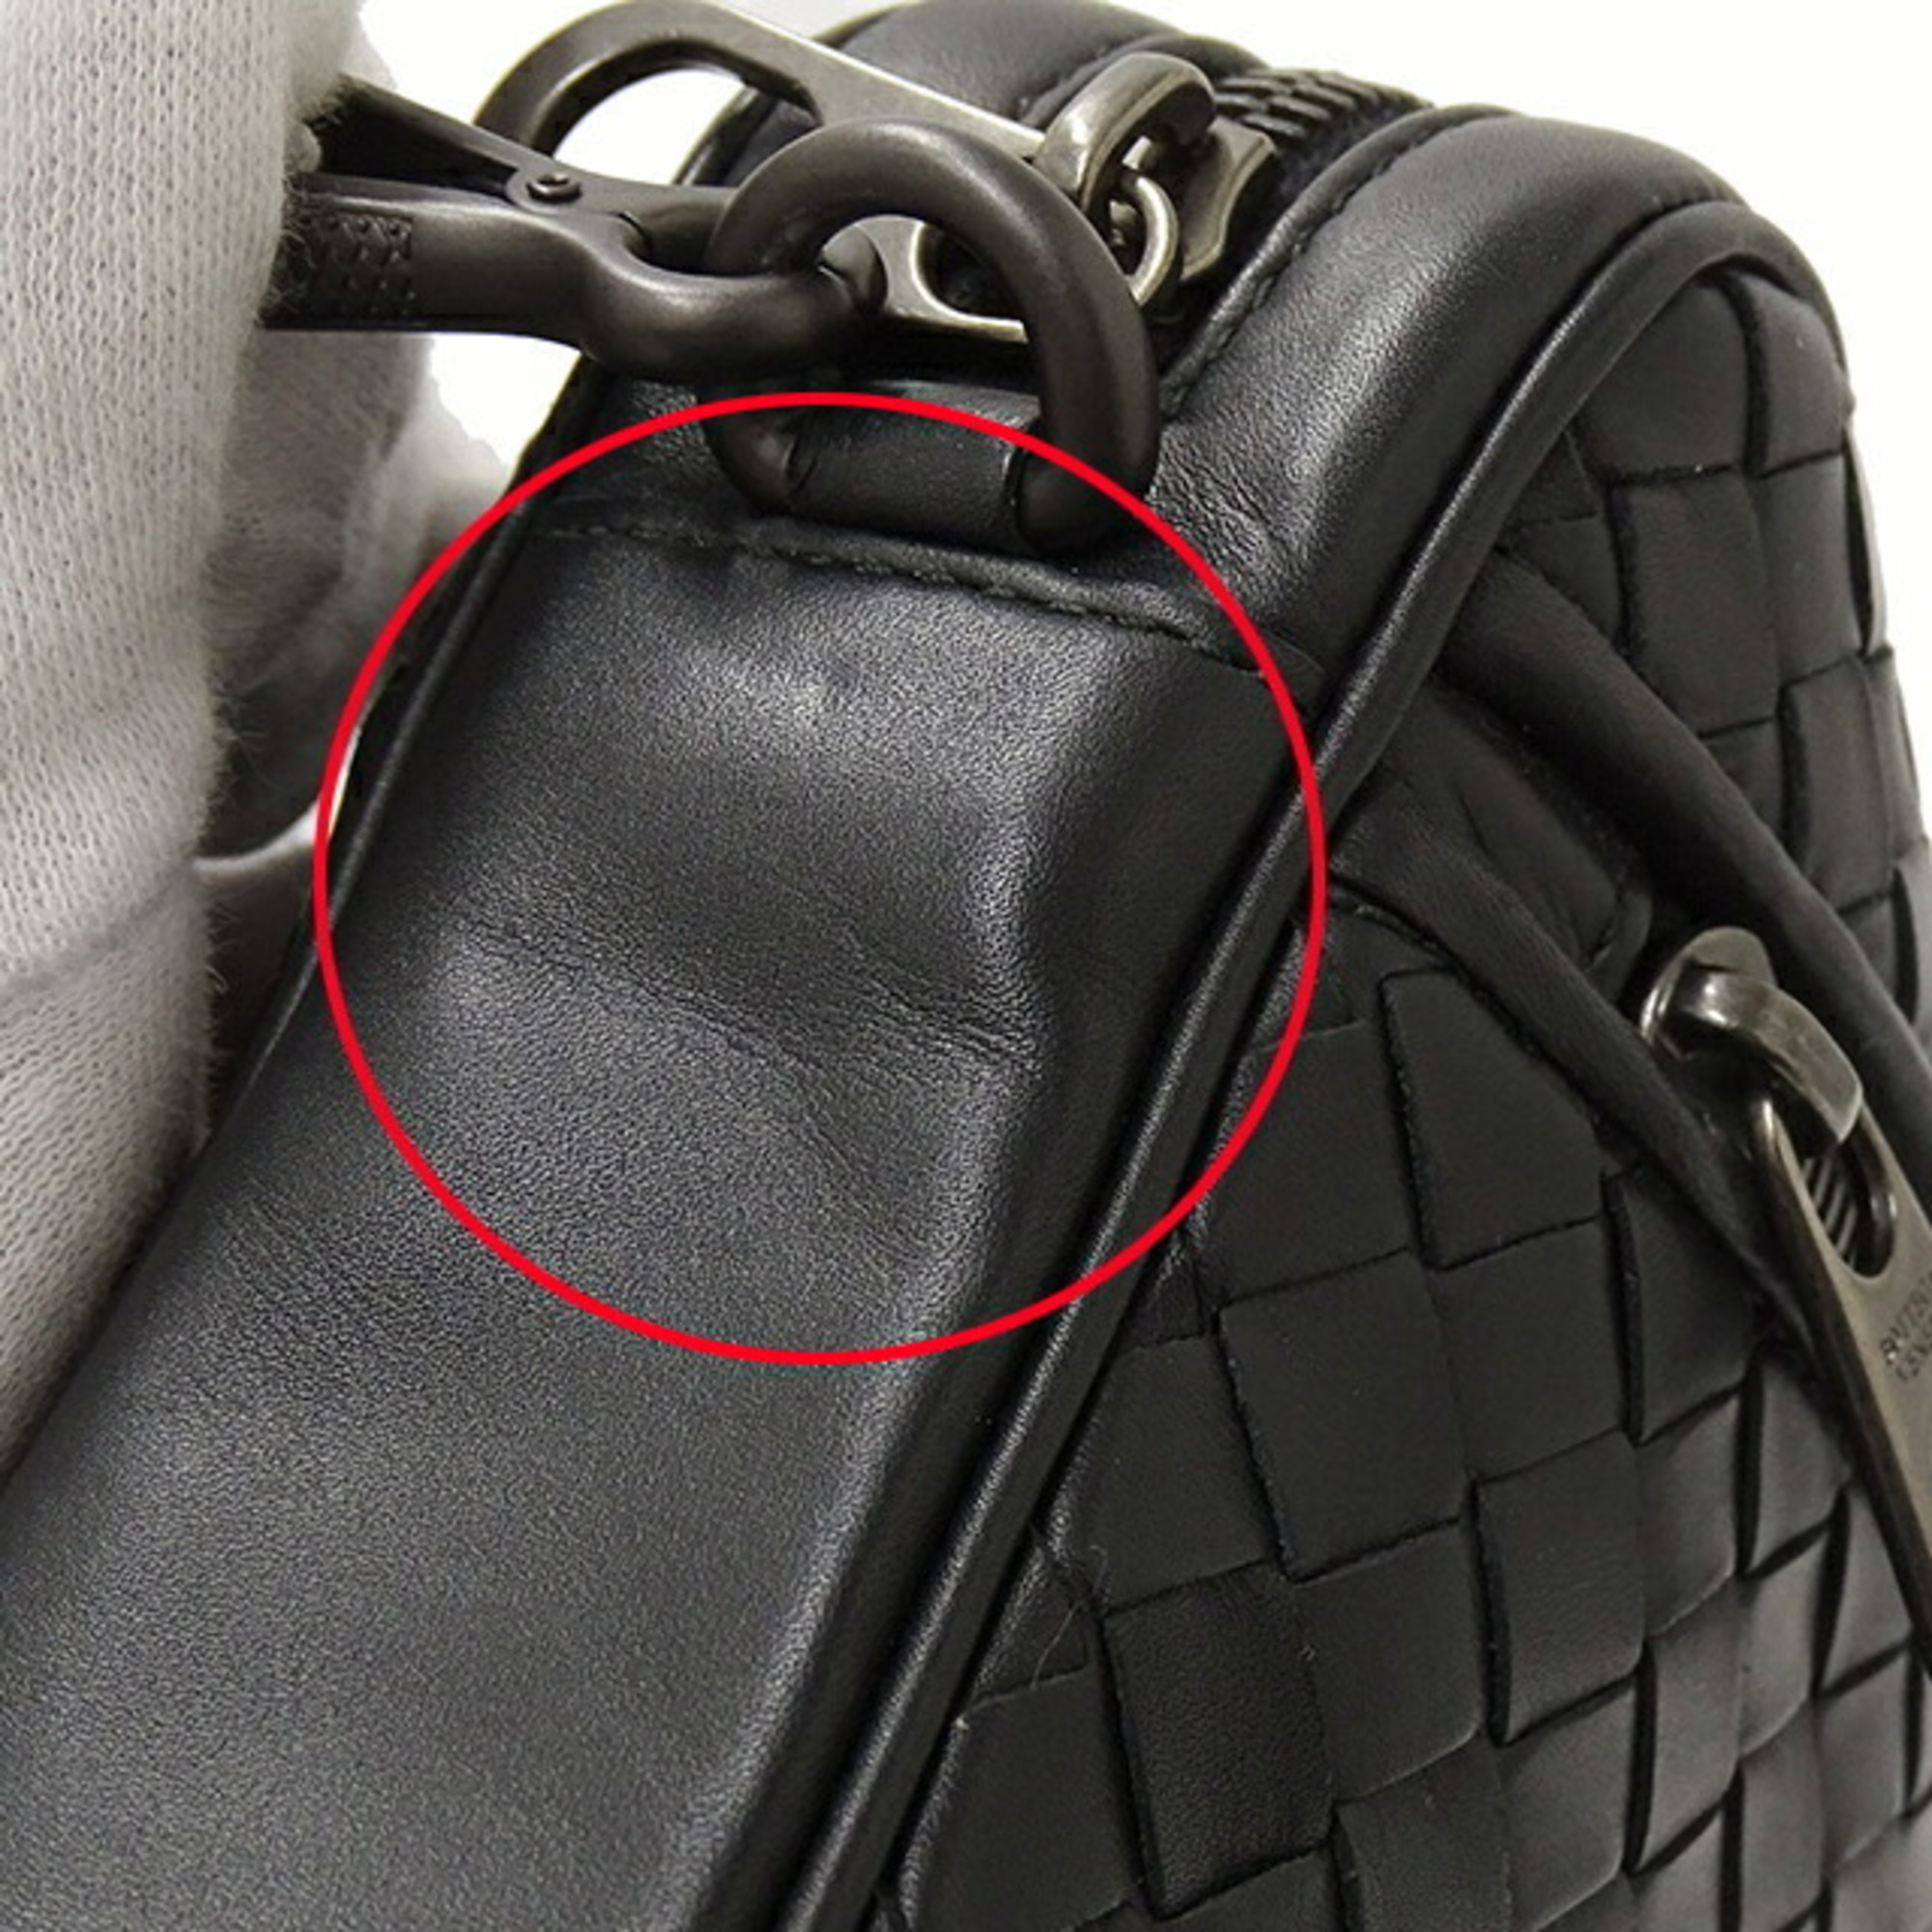 Bottega Veneta BOTTEGAVENETA Bag Men's Brand Intrecciato Shoulder Leather Black 548040 Compact